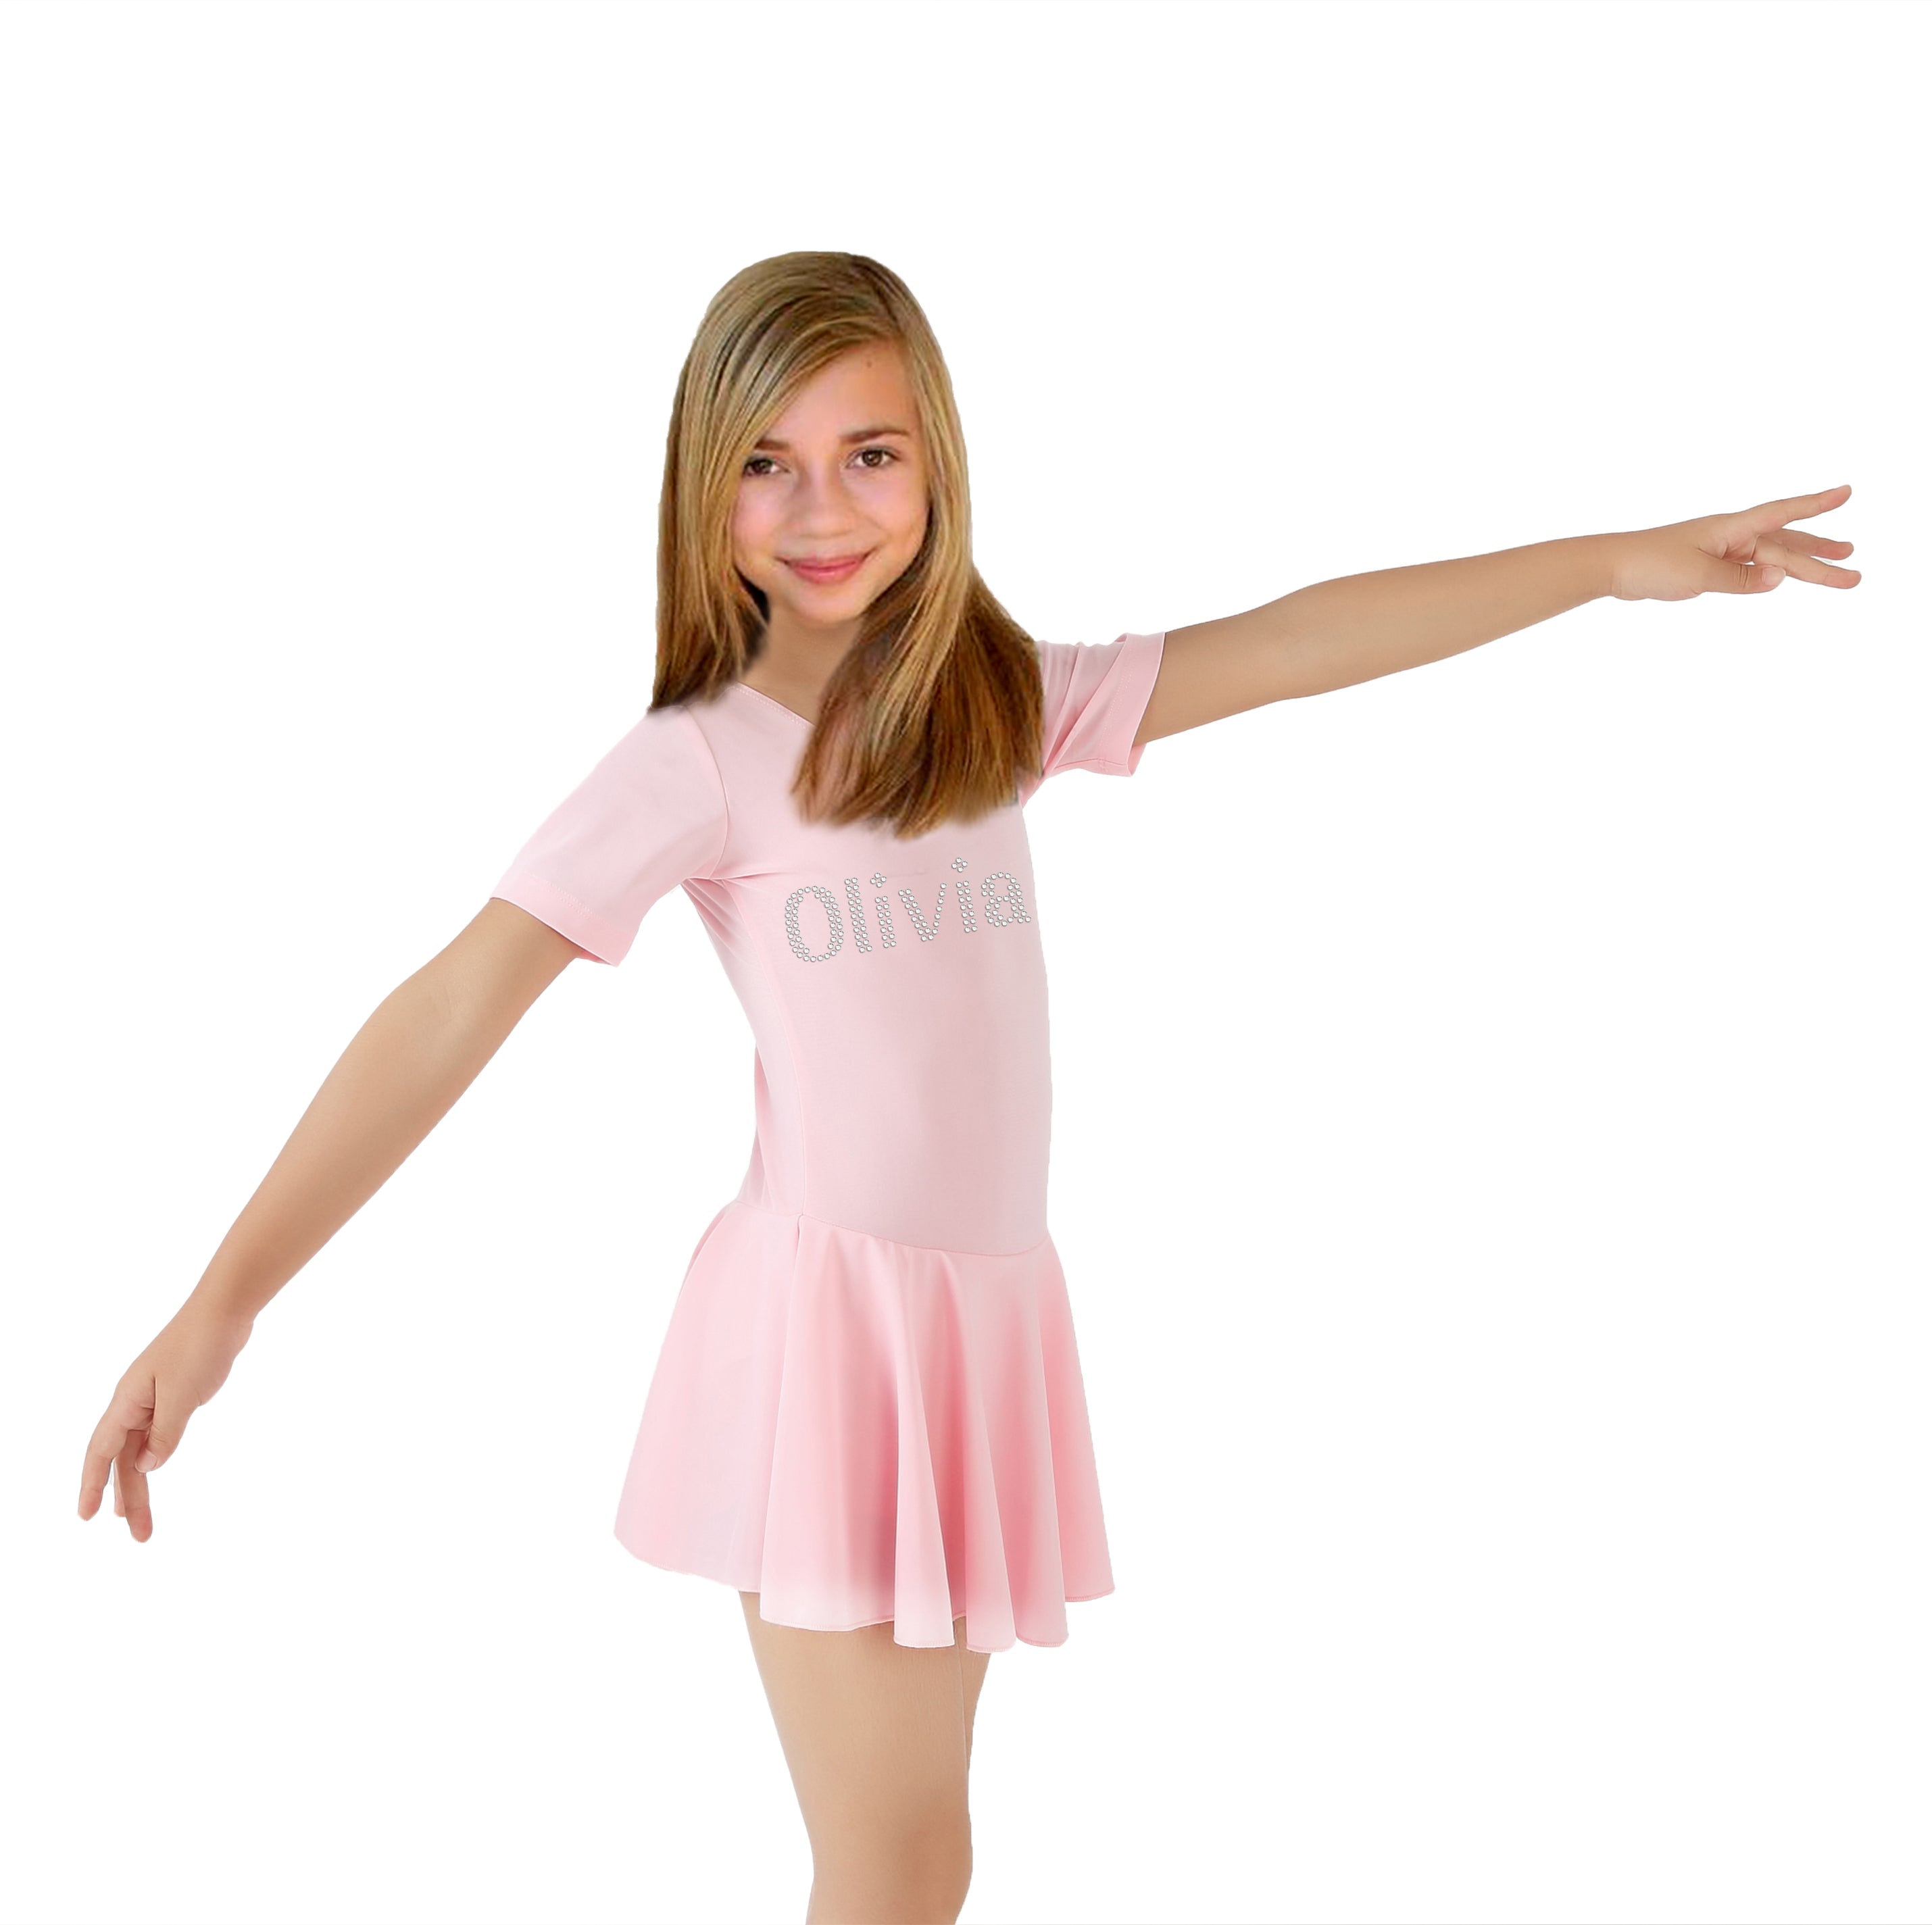 Varsany Personalised Girls Pink Ballet Leotard Skirt Gymnastics 